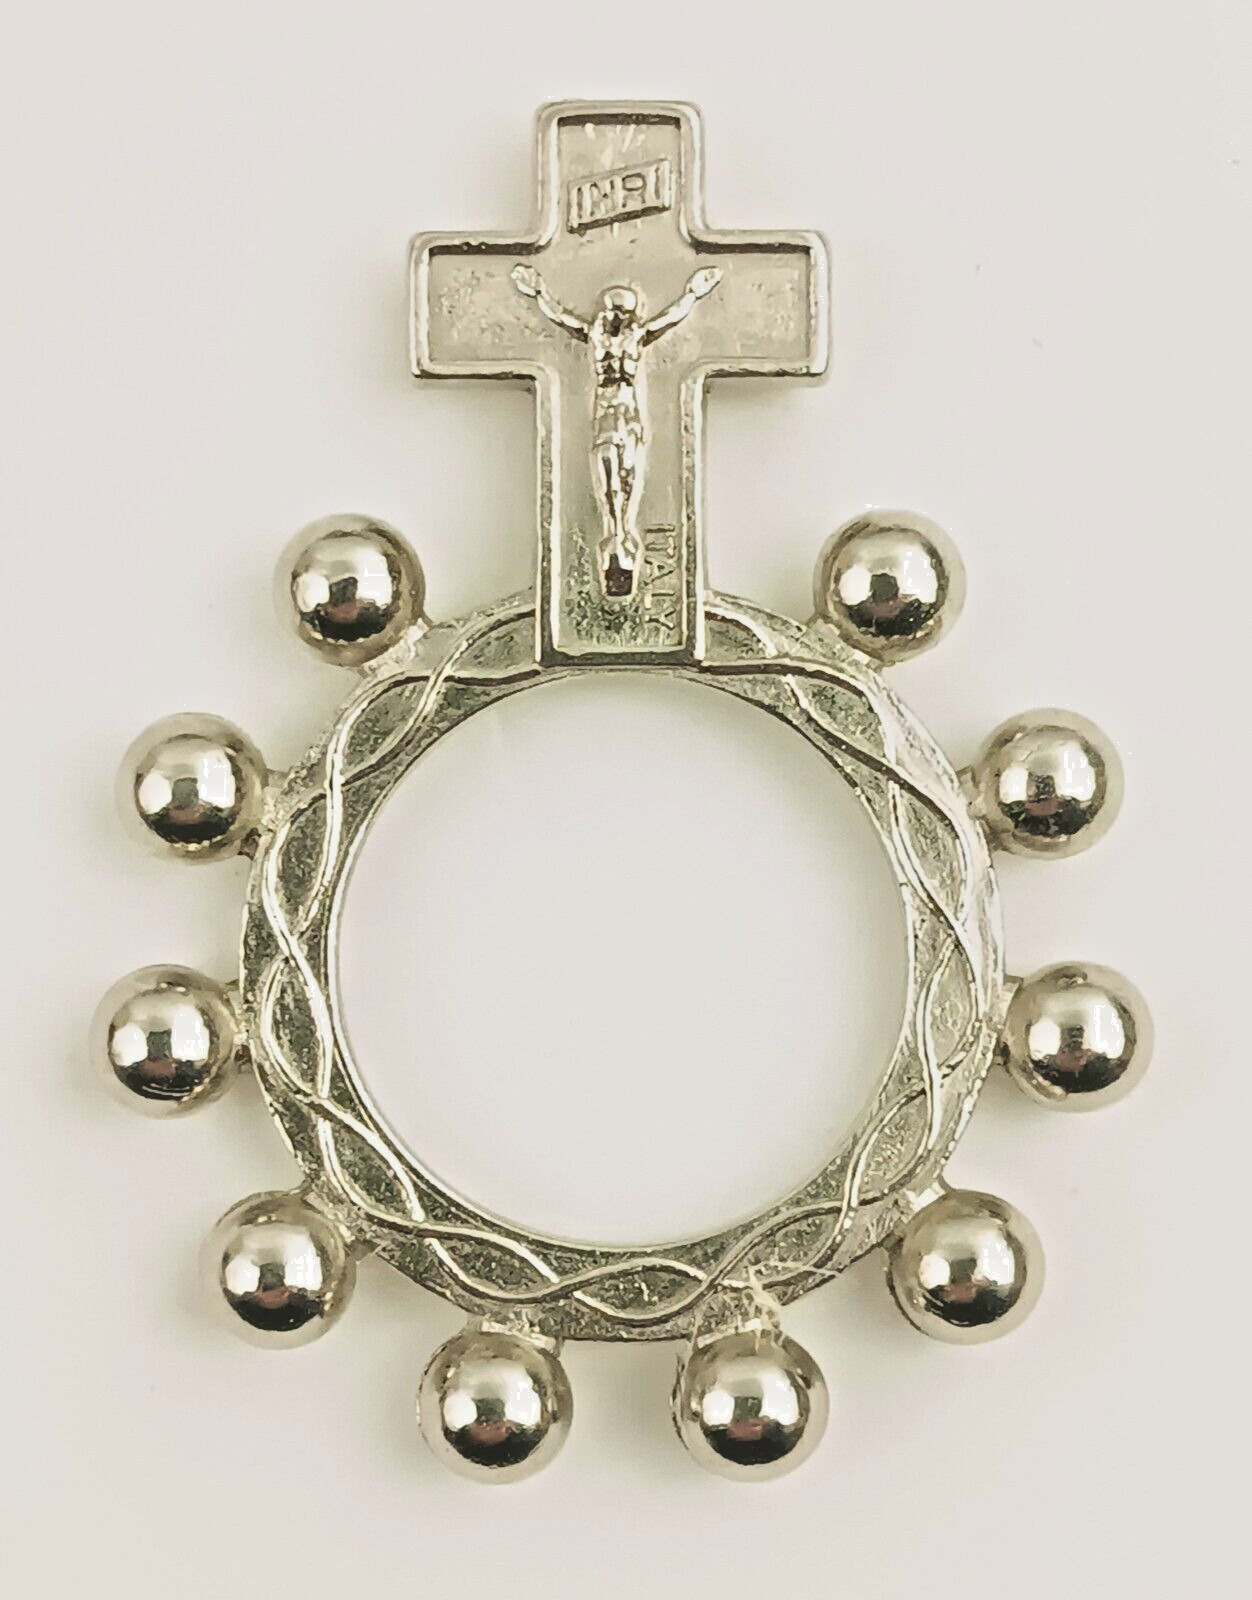 Vintage INRI Jesus Pocket Rosary Ring Made in Italy